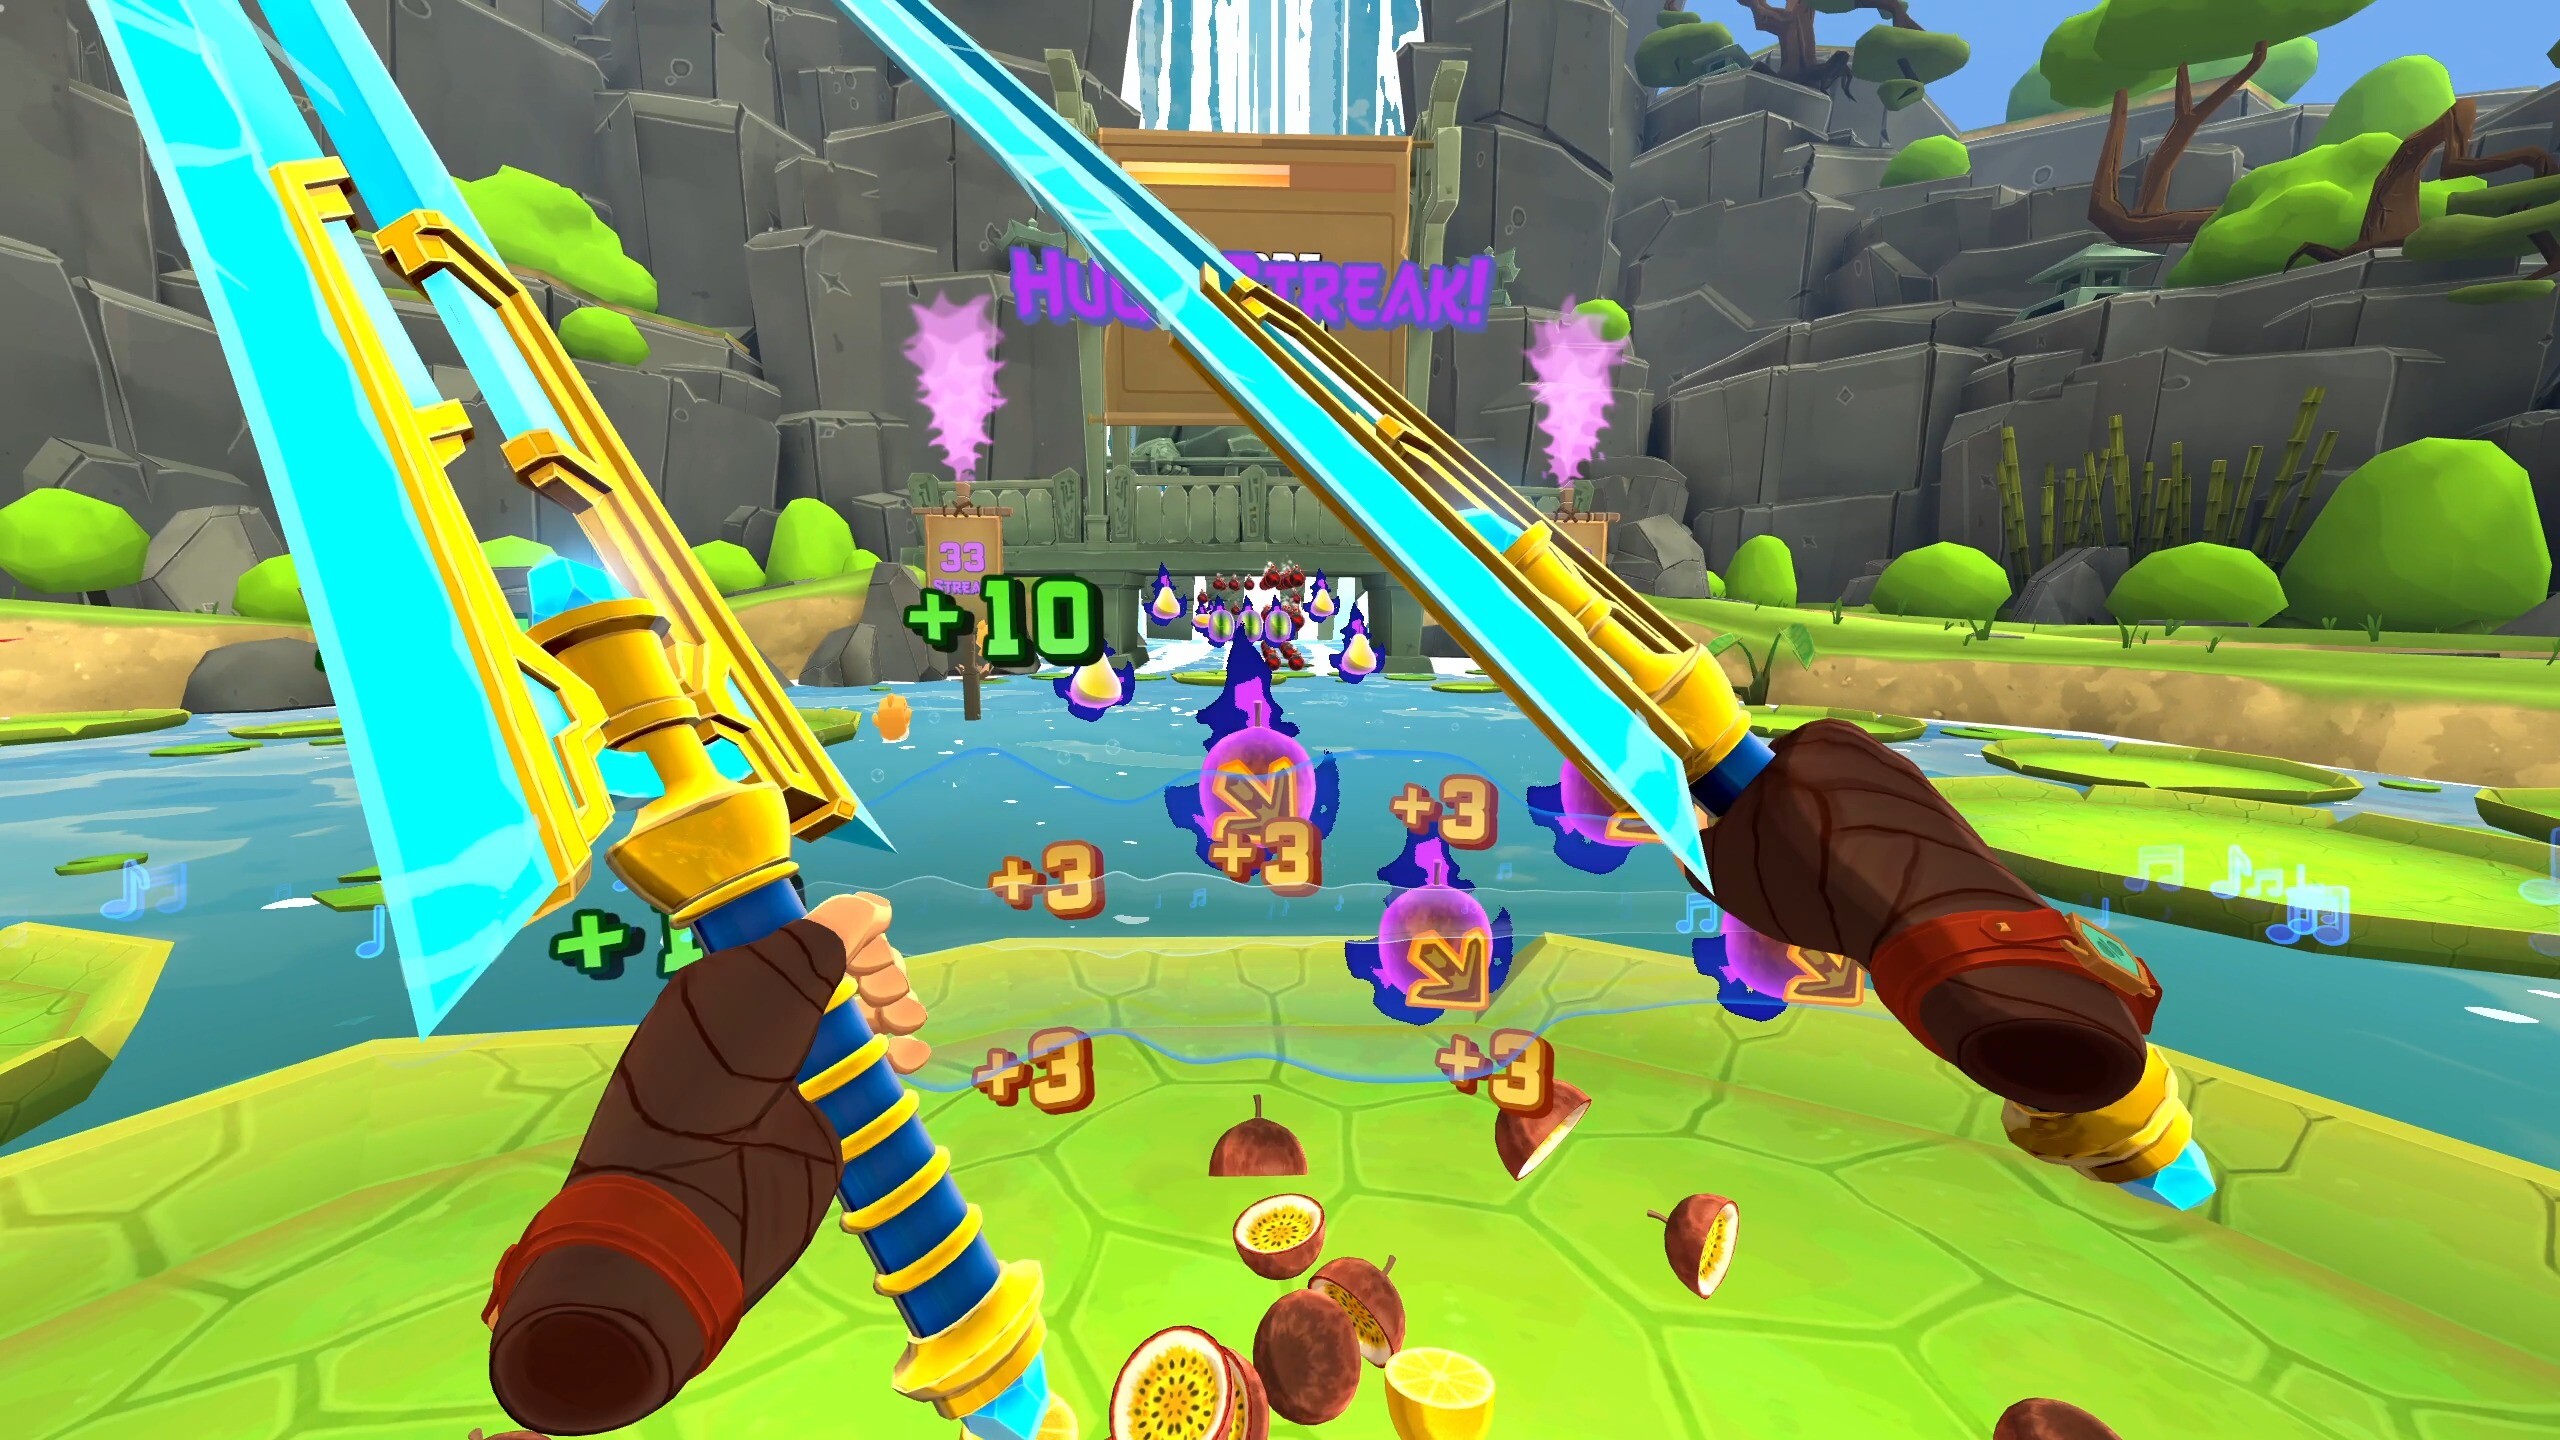 A screenshot of the game